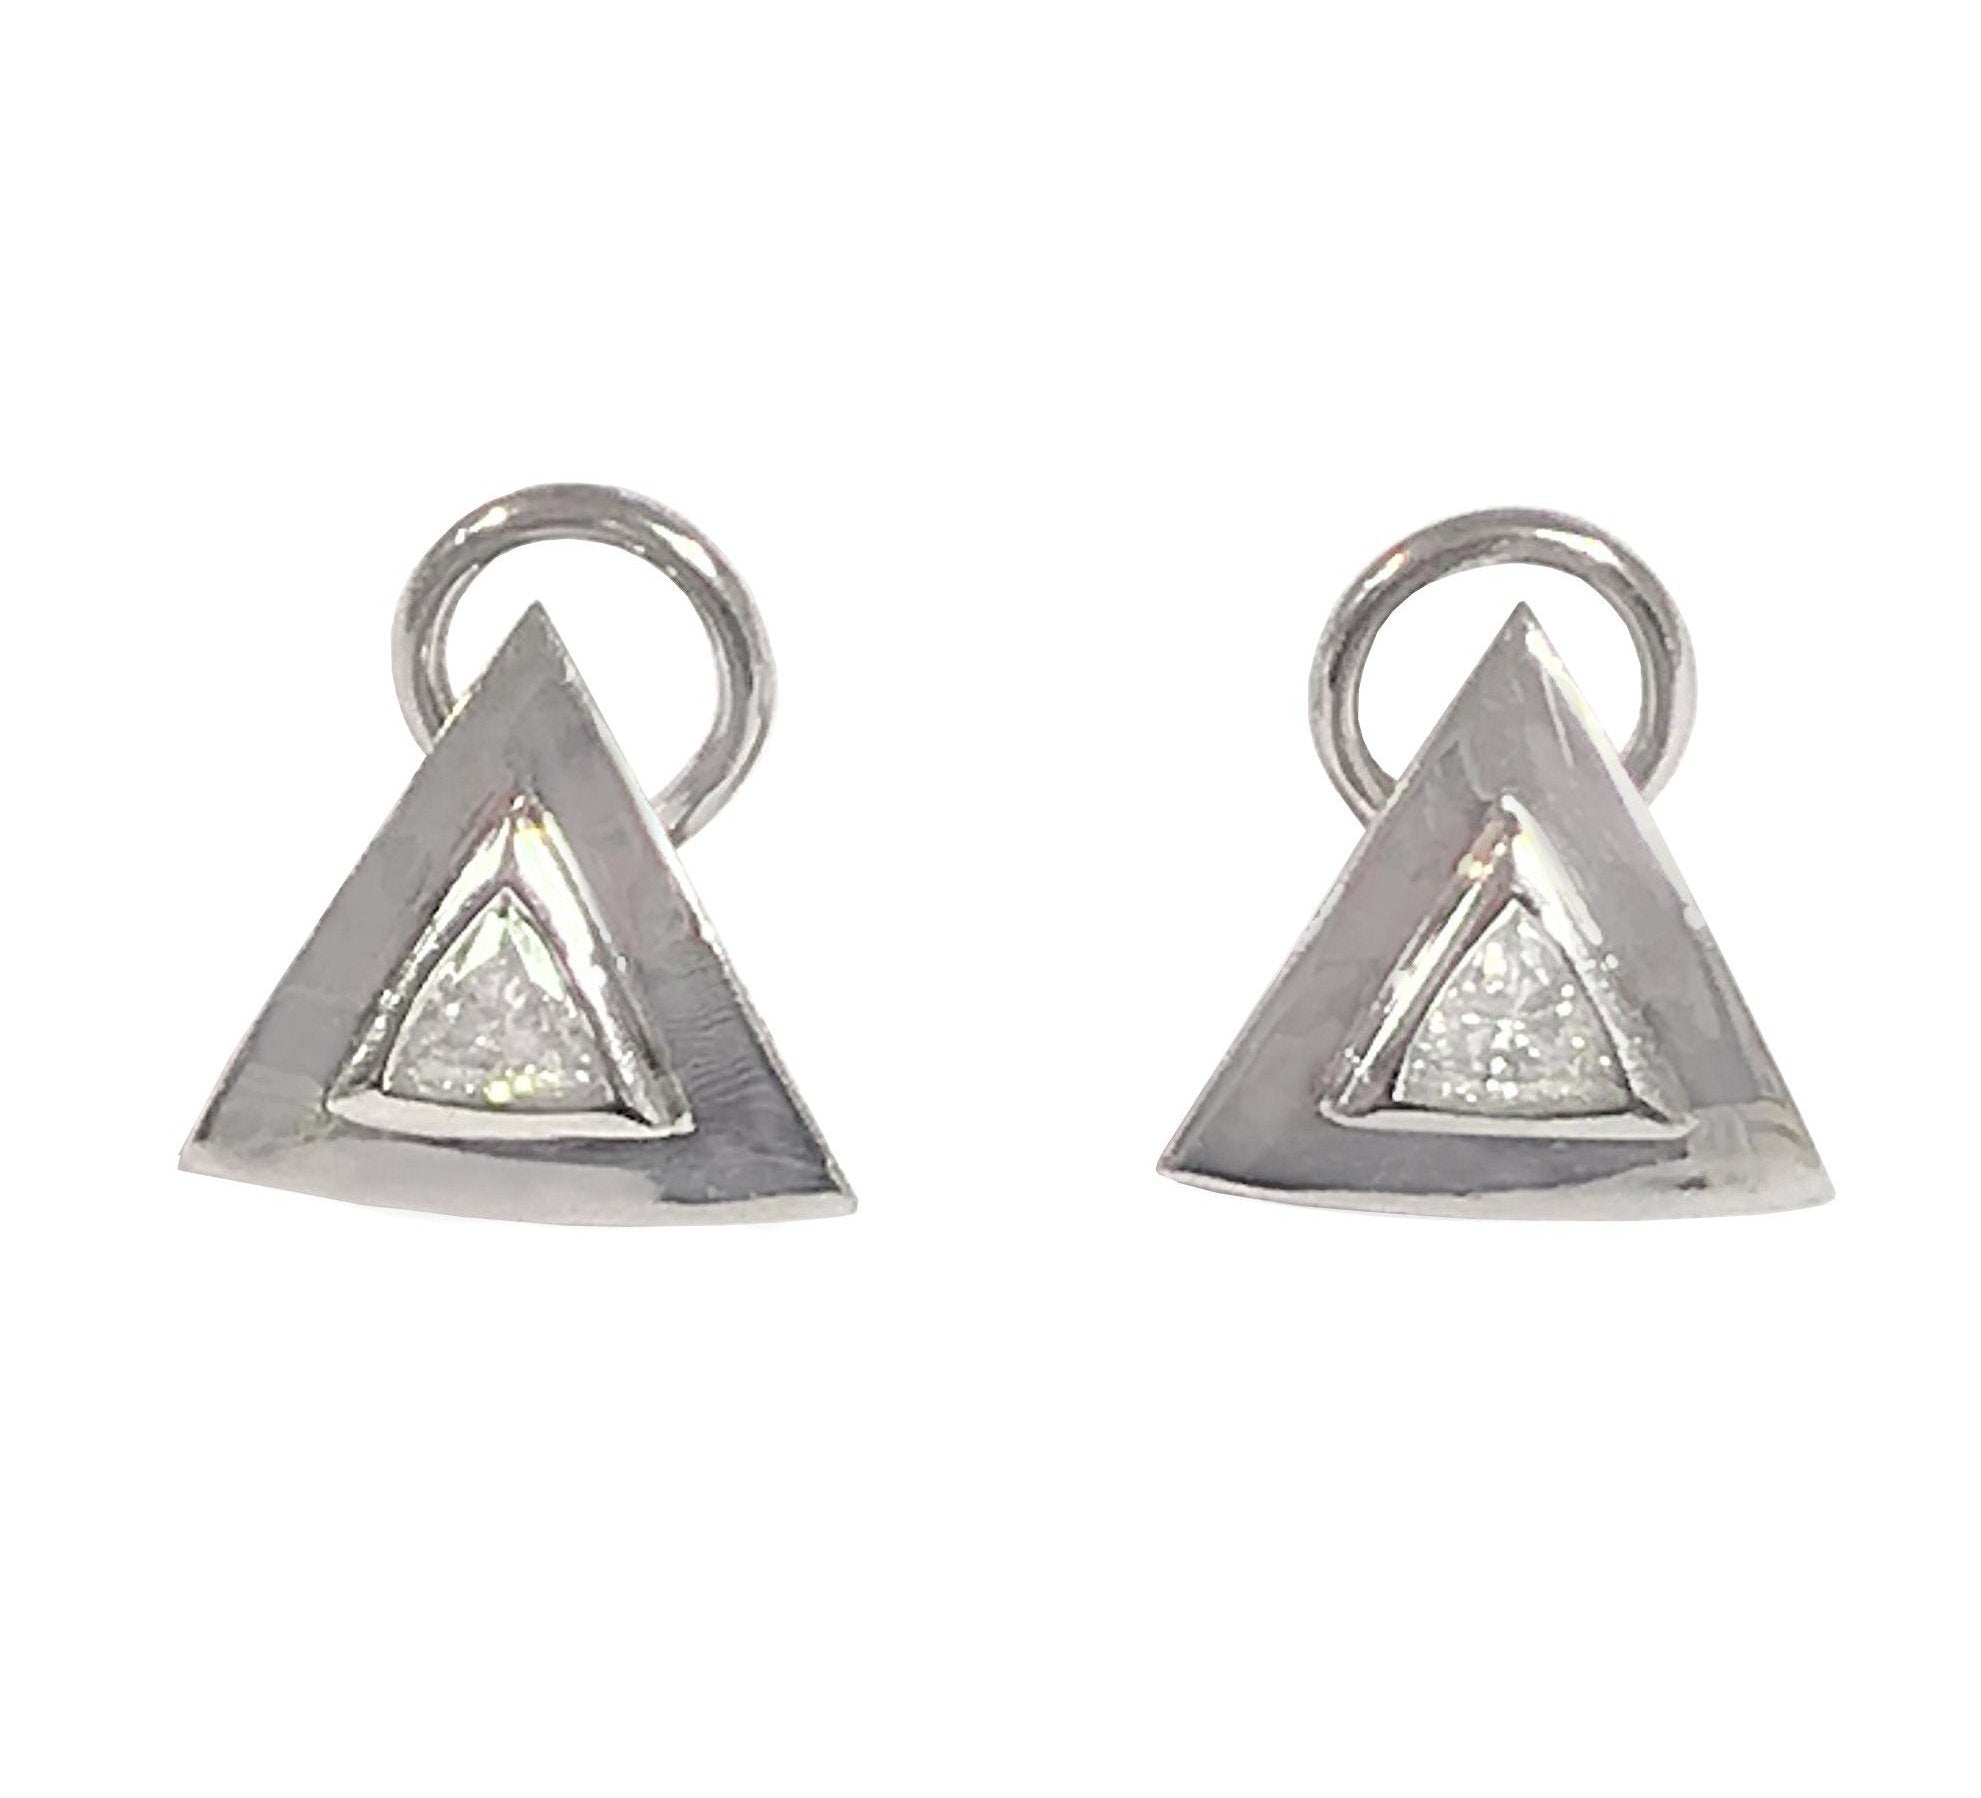 White Gold Triangle Diamond Earrings